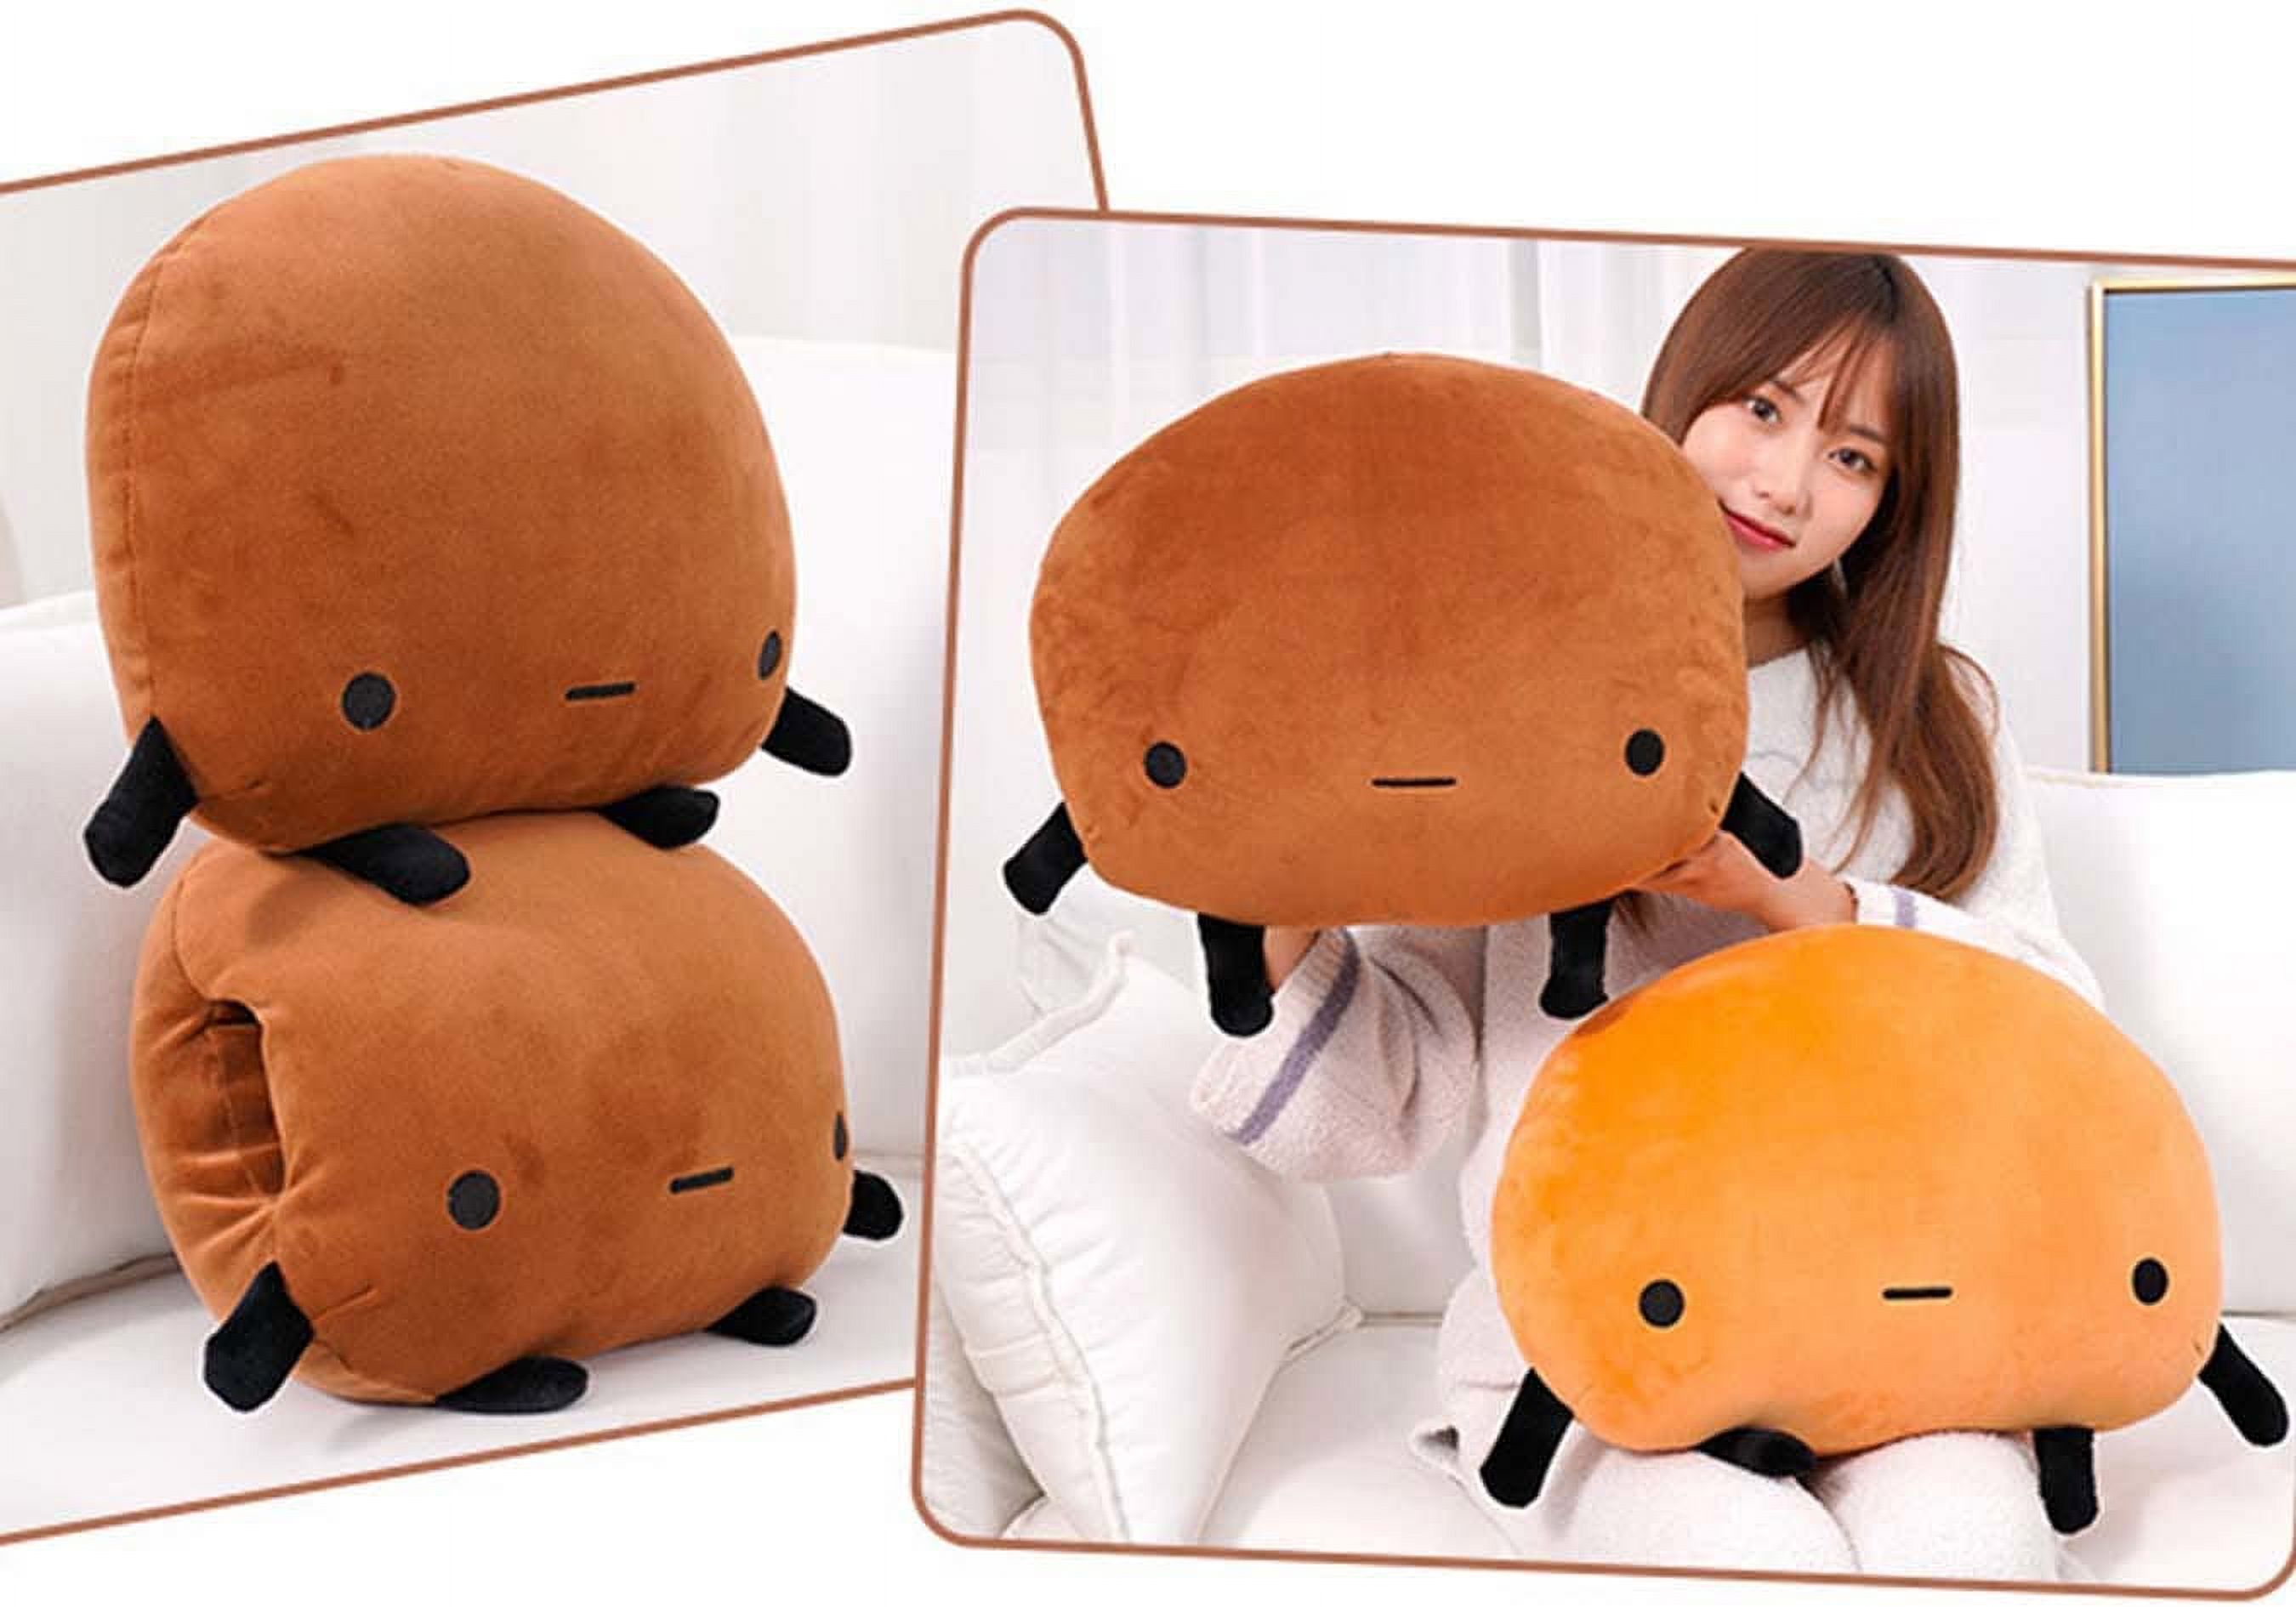 Danceemangoo Potato Plush Pillow, Cute Sad Potato Plush, Funny Food Stuffed Plushie Pillow, Soft Plush Doll Room Decor(18'', Orange), Size: 18inch